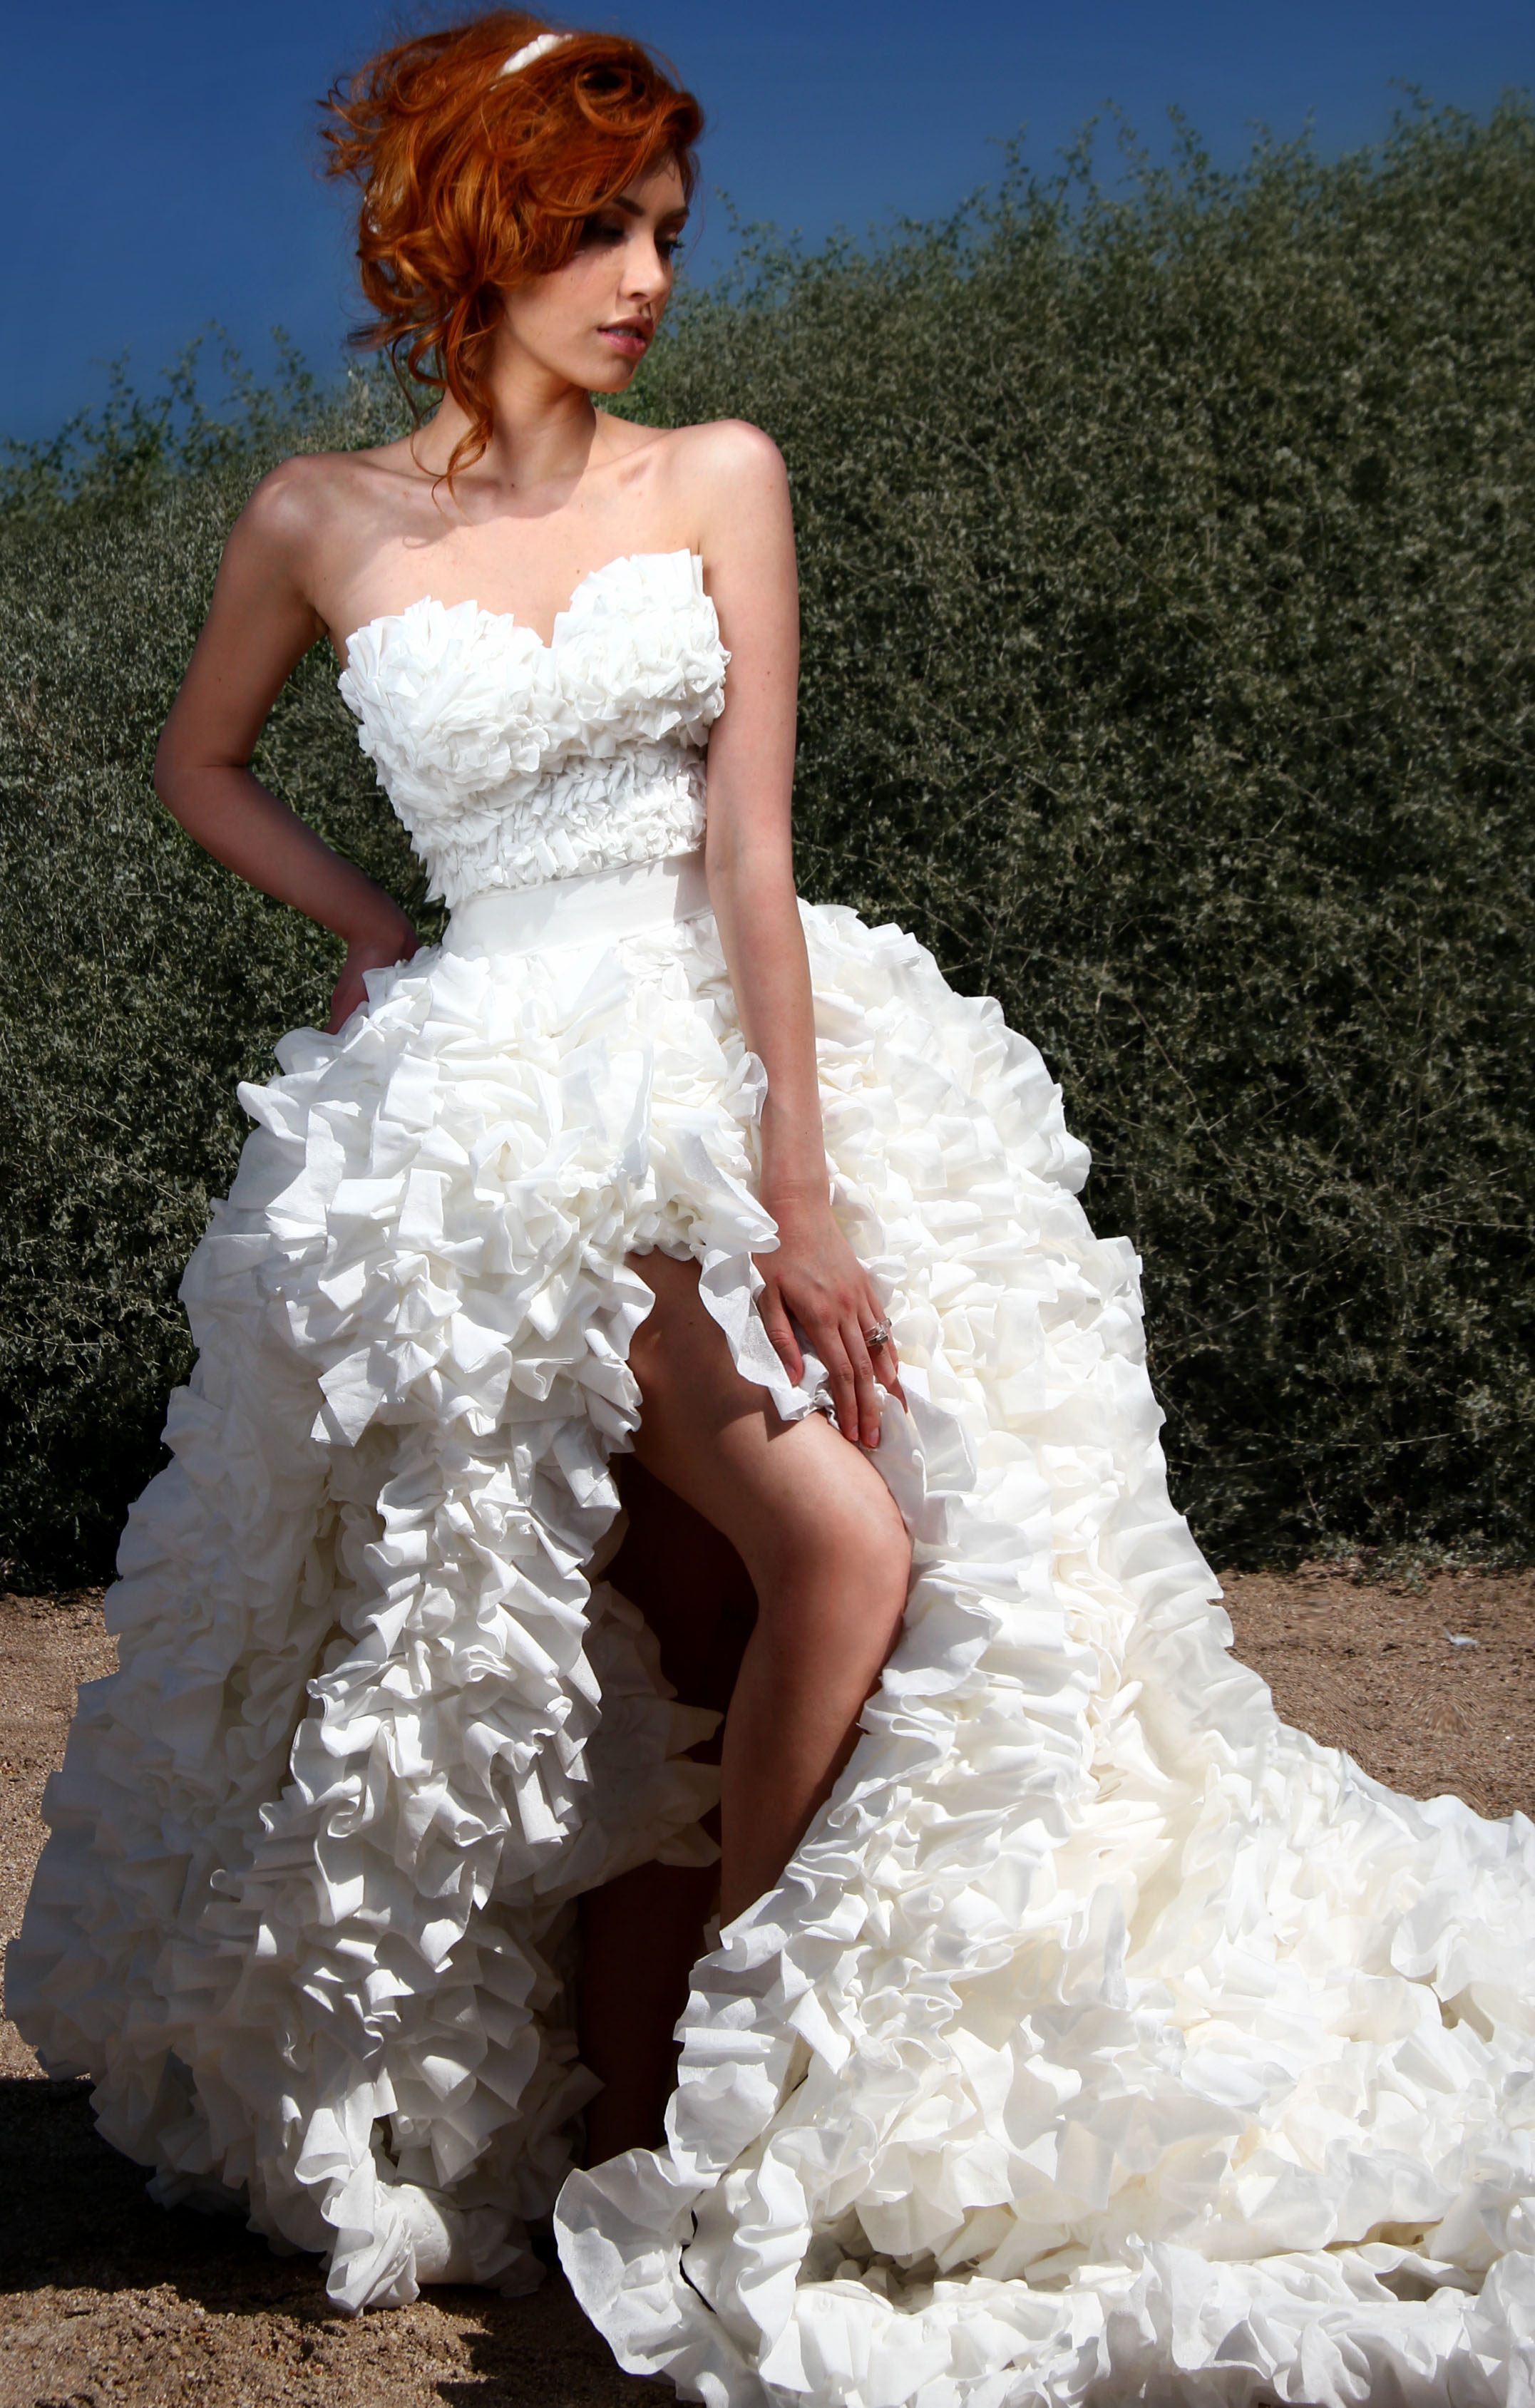 The 2012 Toilet Paper Wedding Dress Contest